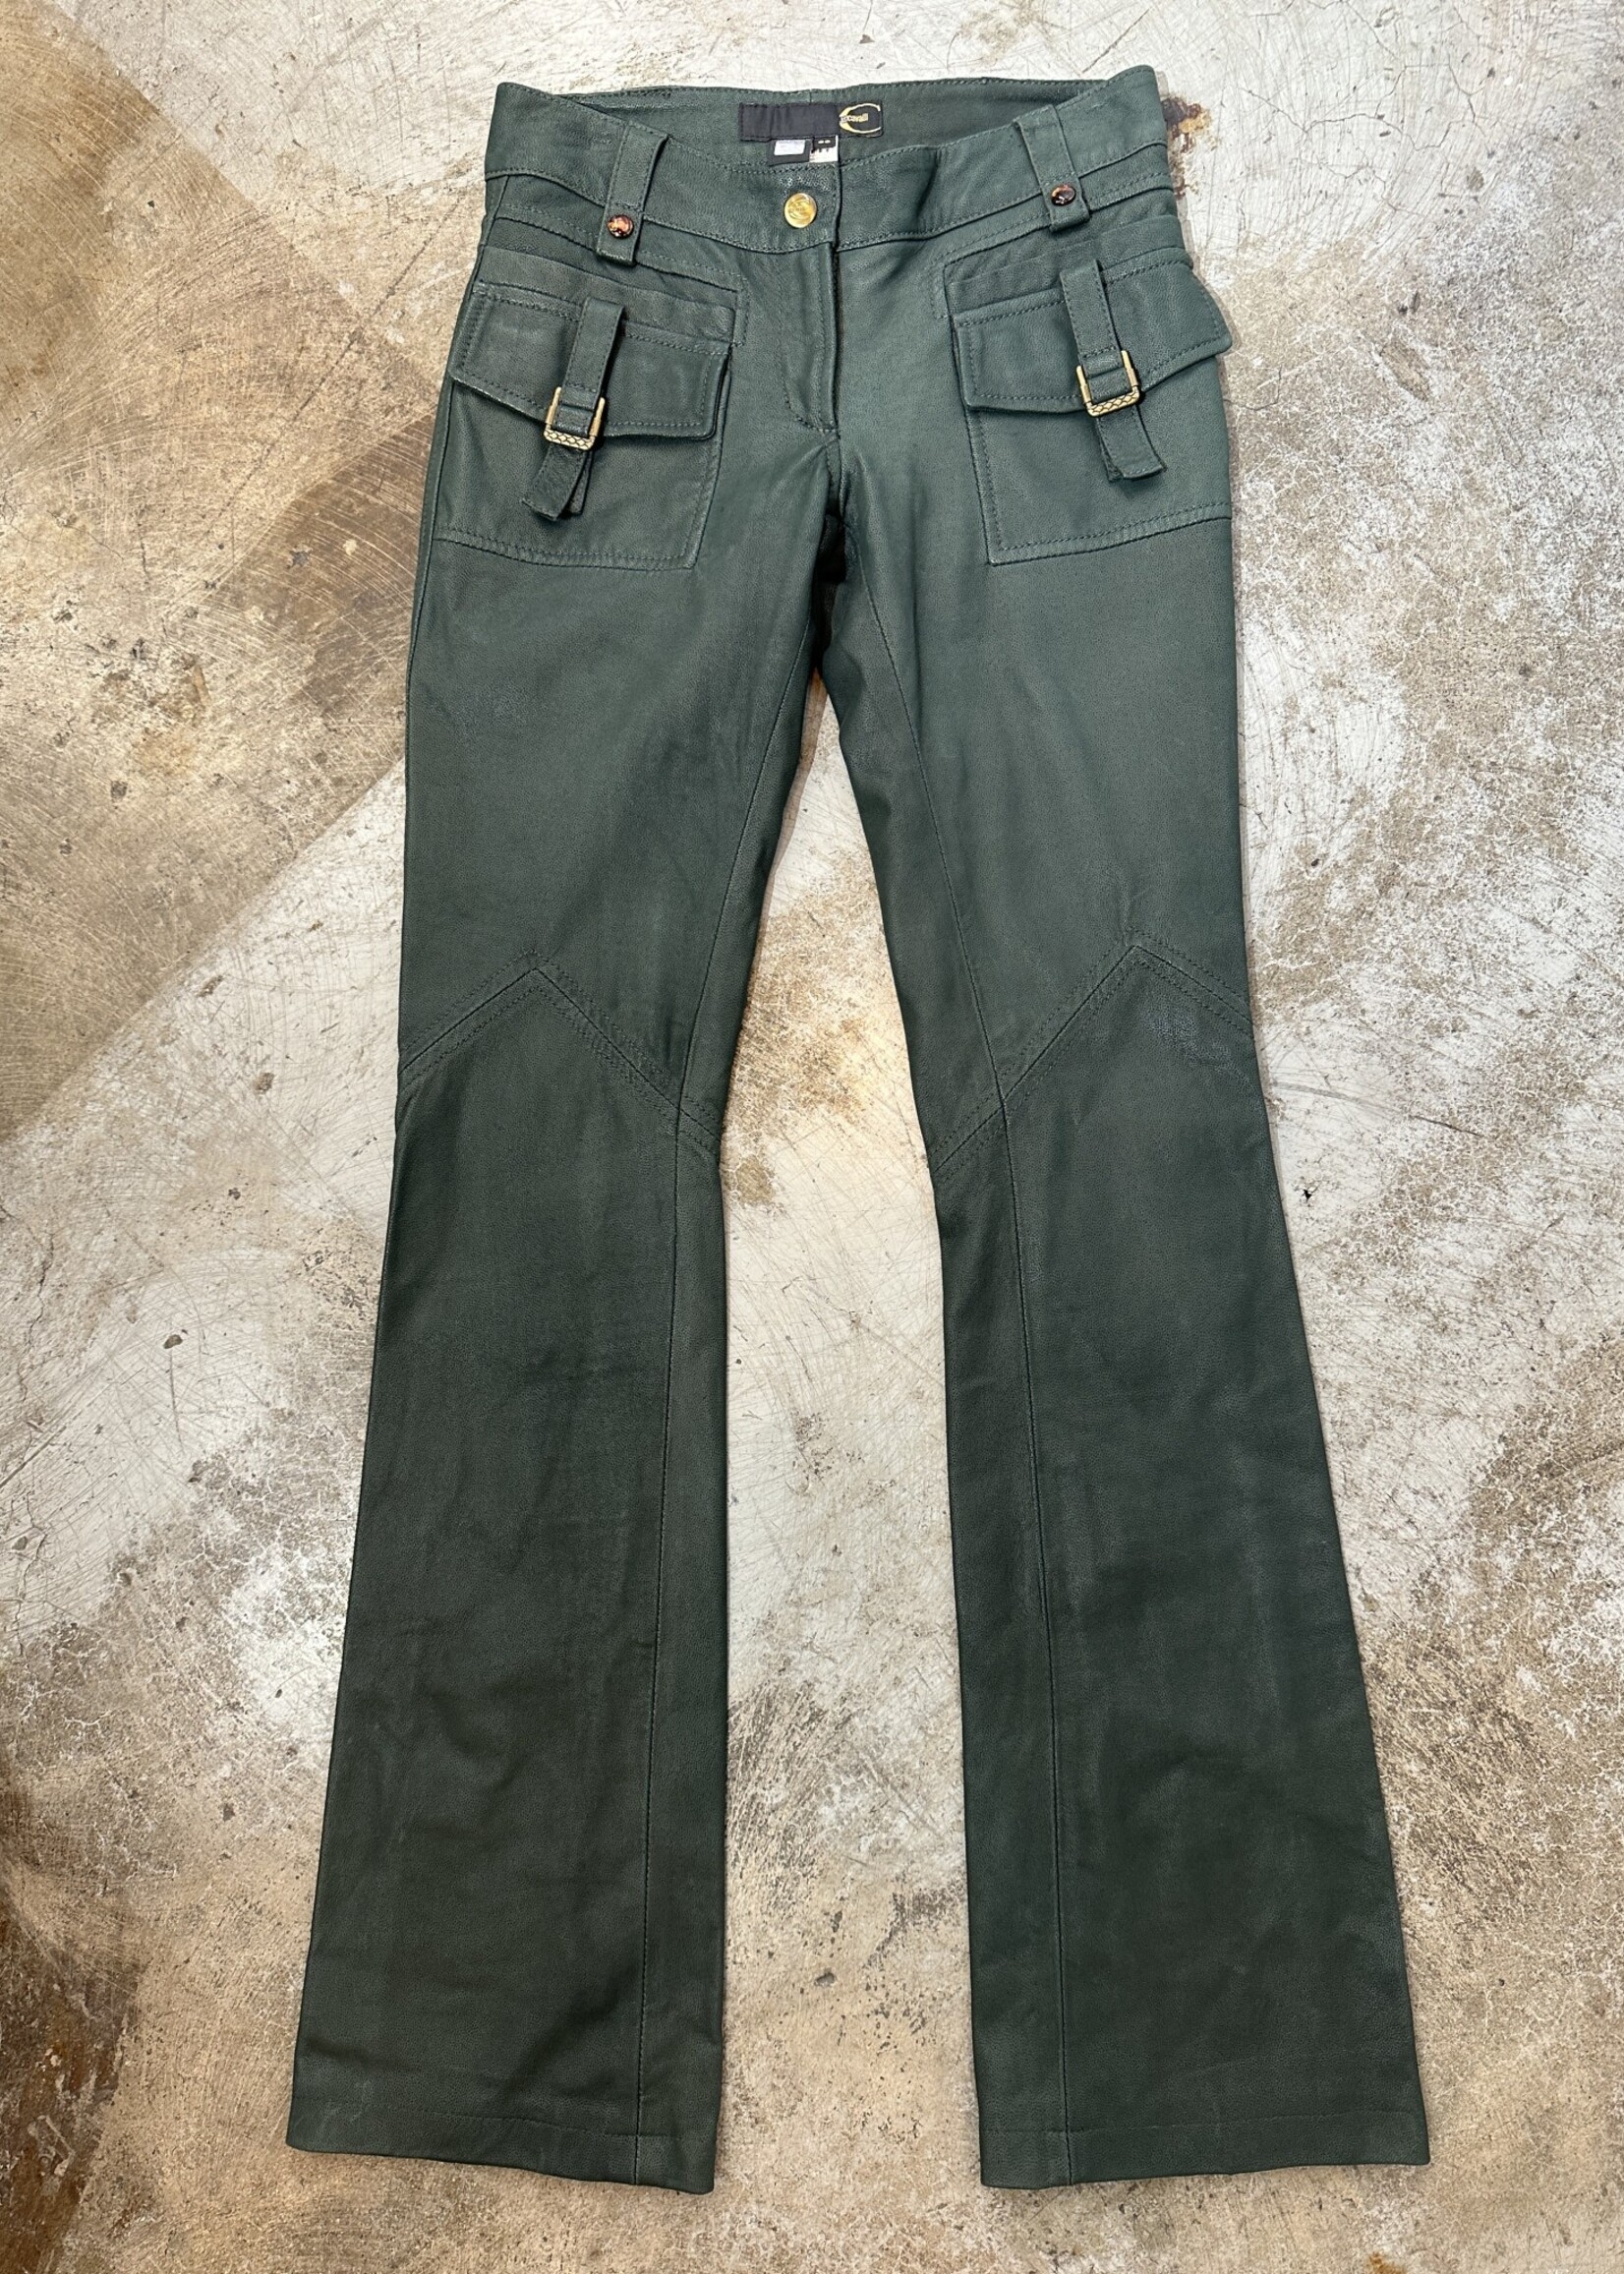 Roberto Cavalli Green Soft Leather Cargo Pants 26"